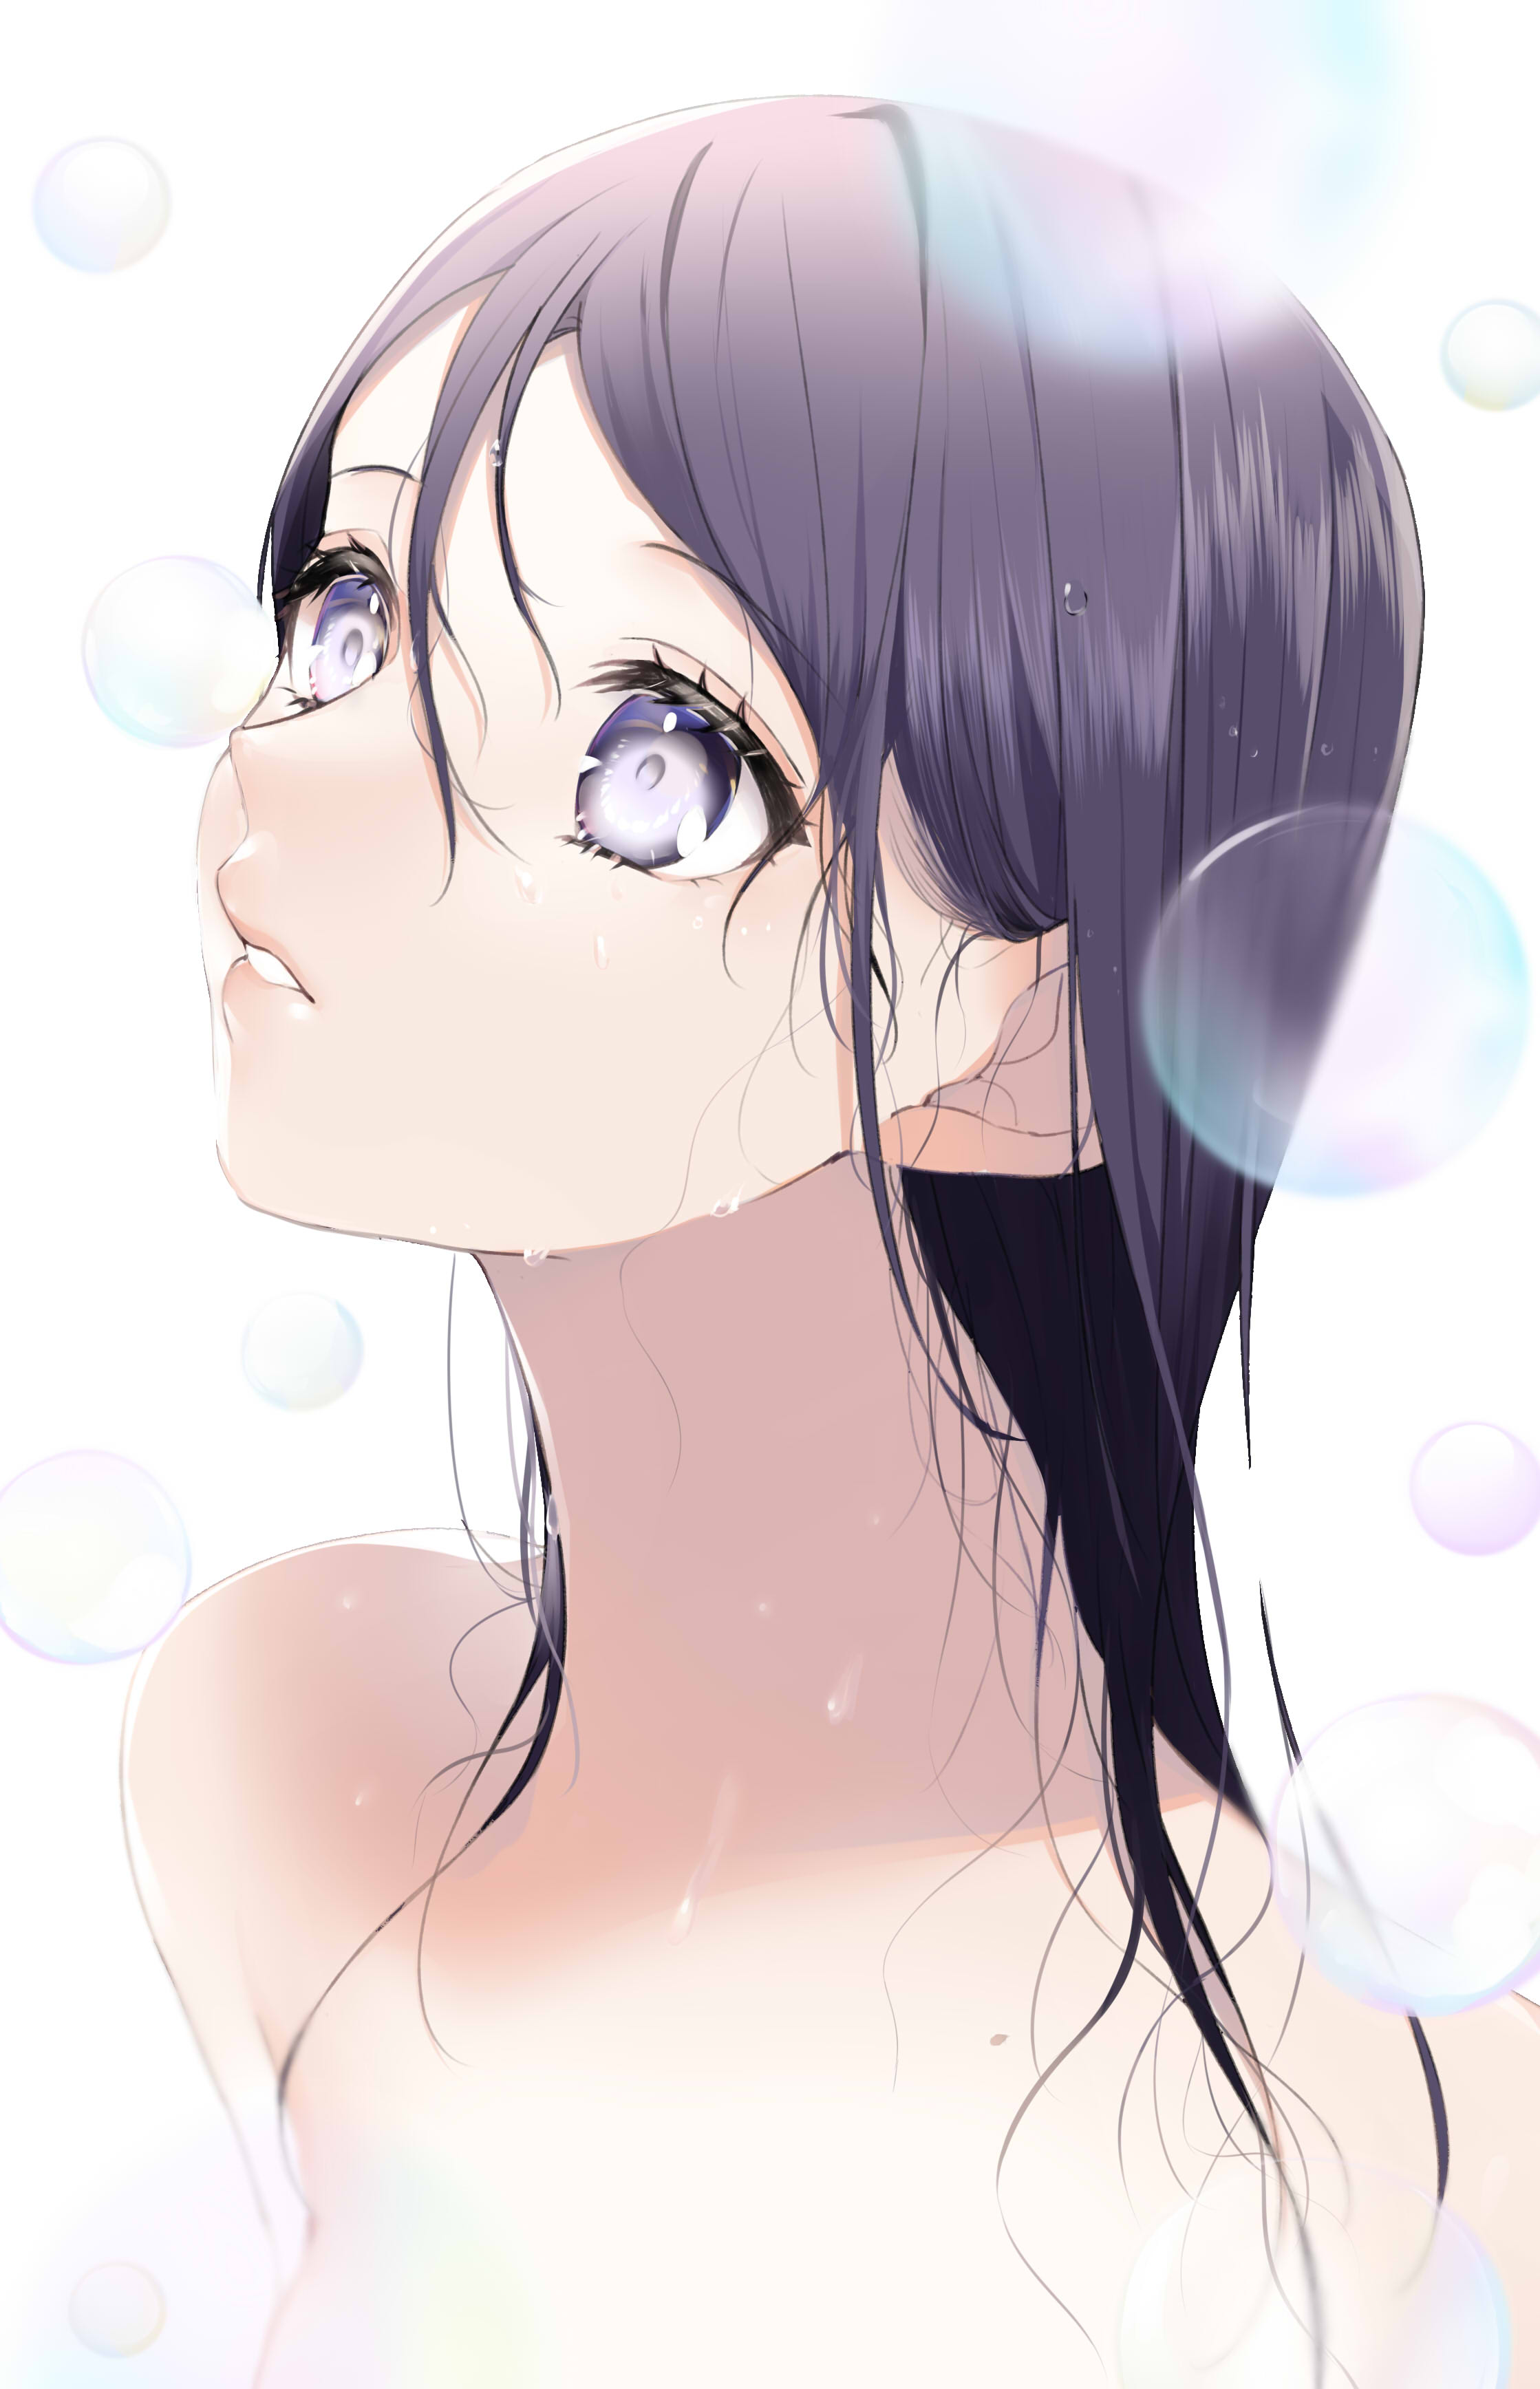 Anime 2238x3472 anime anime girls digital art artwork 2D portrait display wet Sogawa purple hair purple eyes implied nude